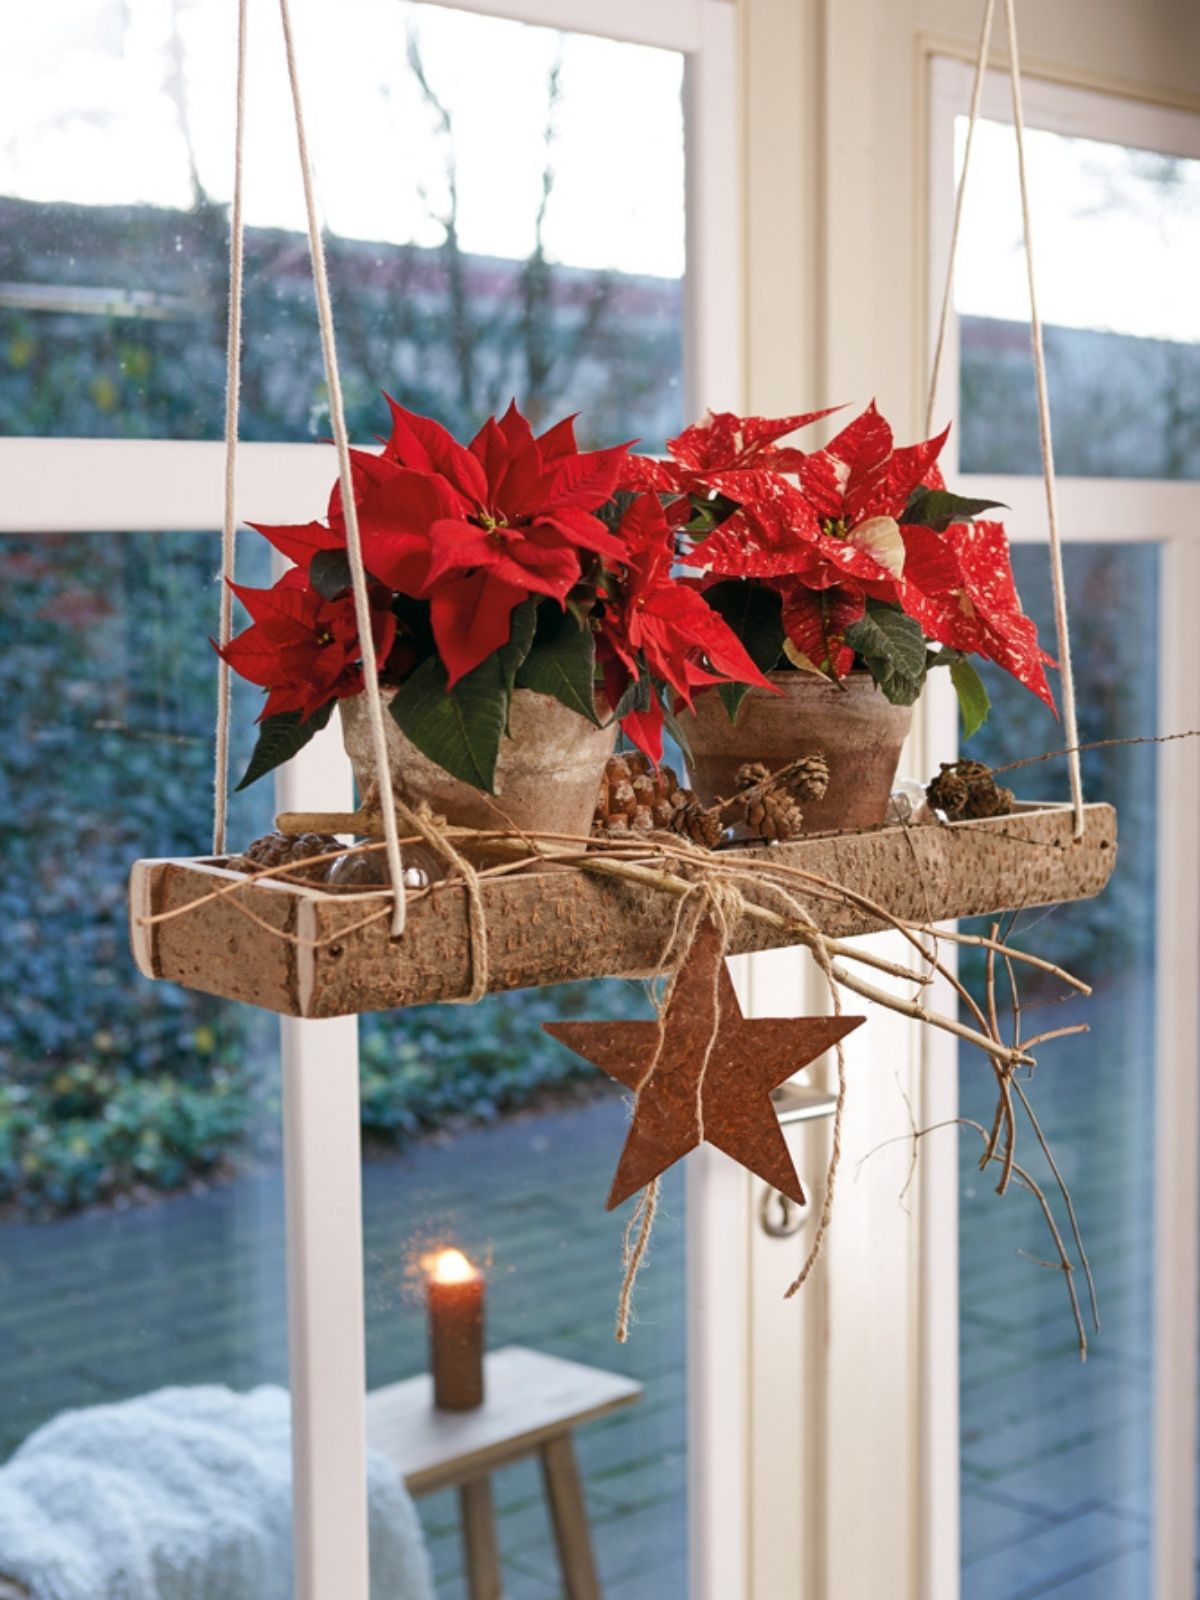 The Most Desired Plants During the Christmas Season in Poland - poinsettias poland - window hanger on thursd